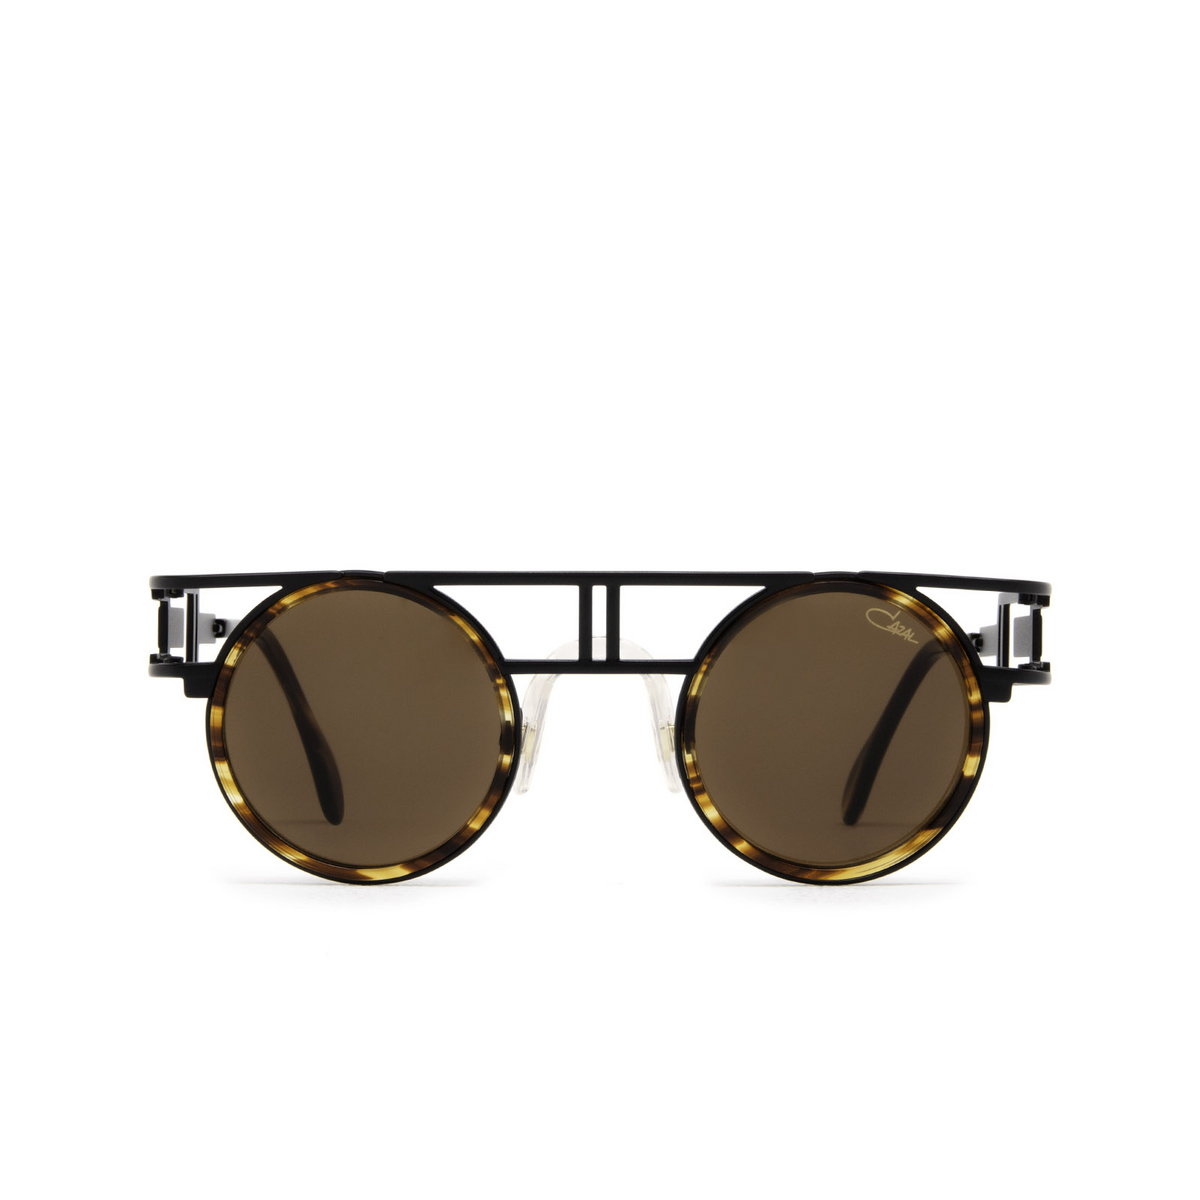 Cazal 668/3 Sunglasses 002 Black - Havana - front view